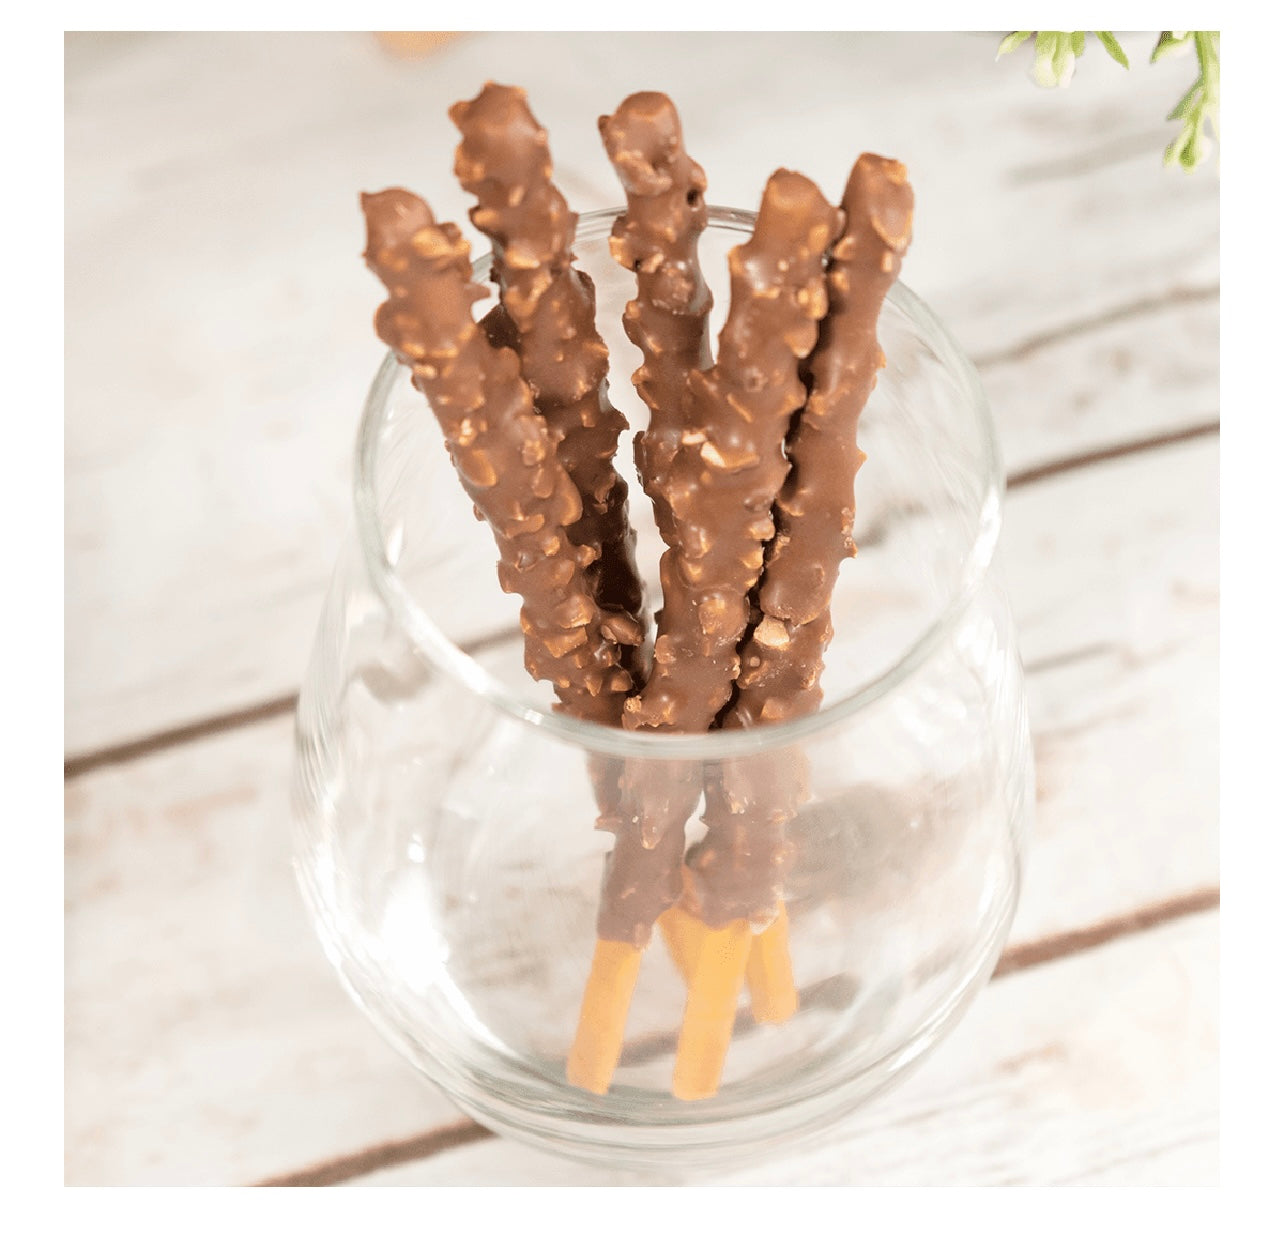 GLICO Almond Crush Pocky Chocolate Cookie Sticks,
1.45oz